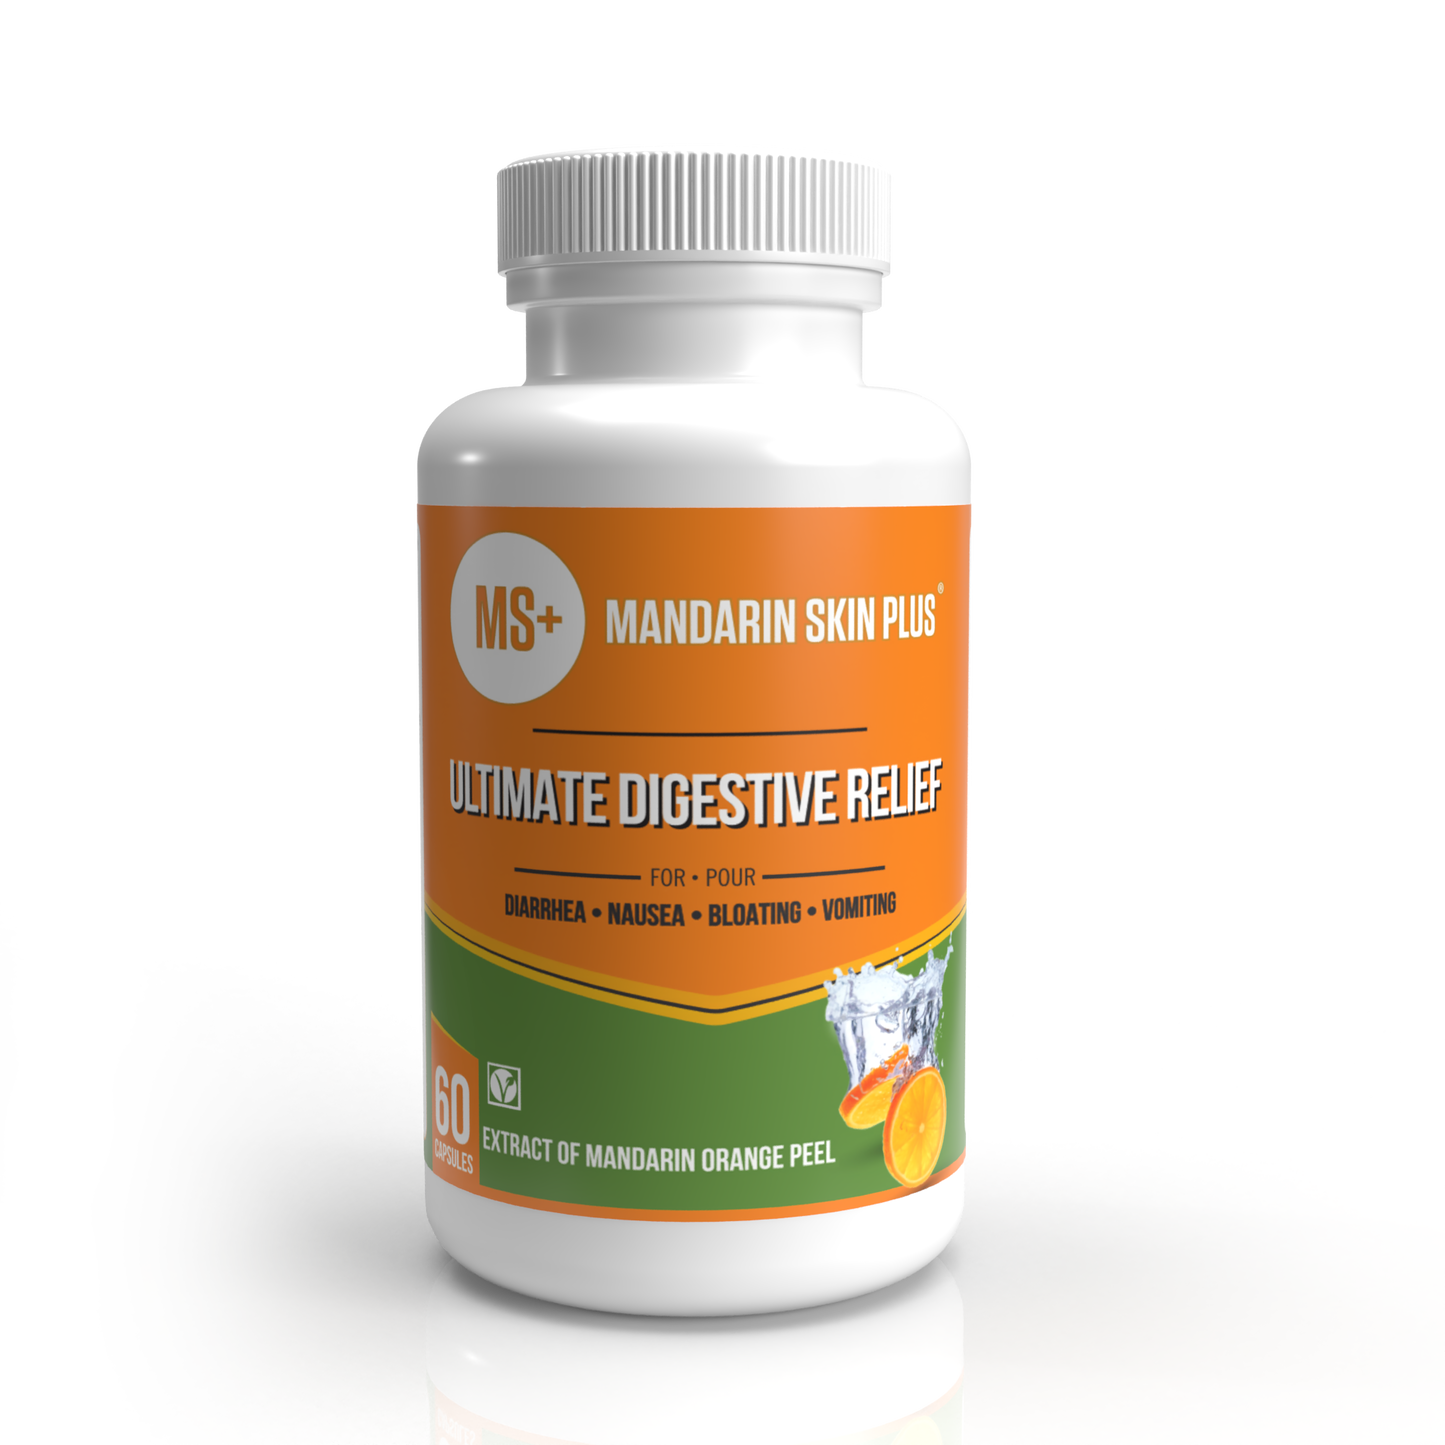 MS+ Mandarin Skin Plus® - Ultimate Digestive Relief